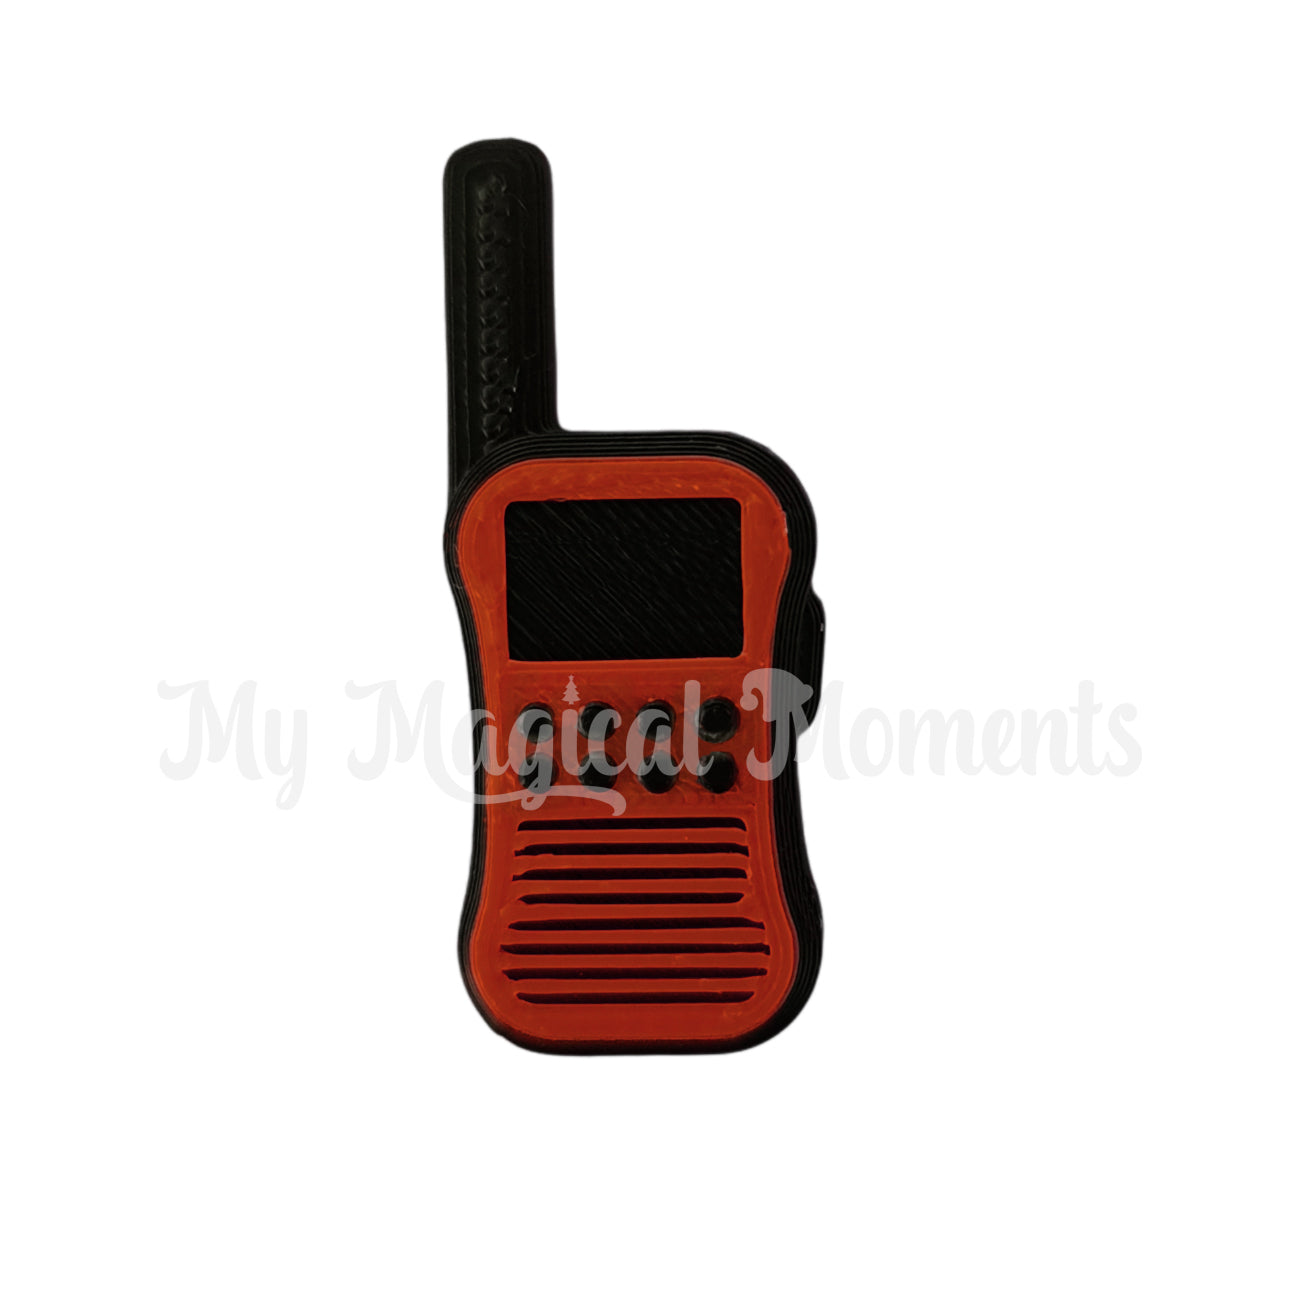 red miniature walkie talkie